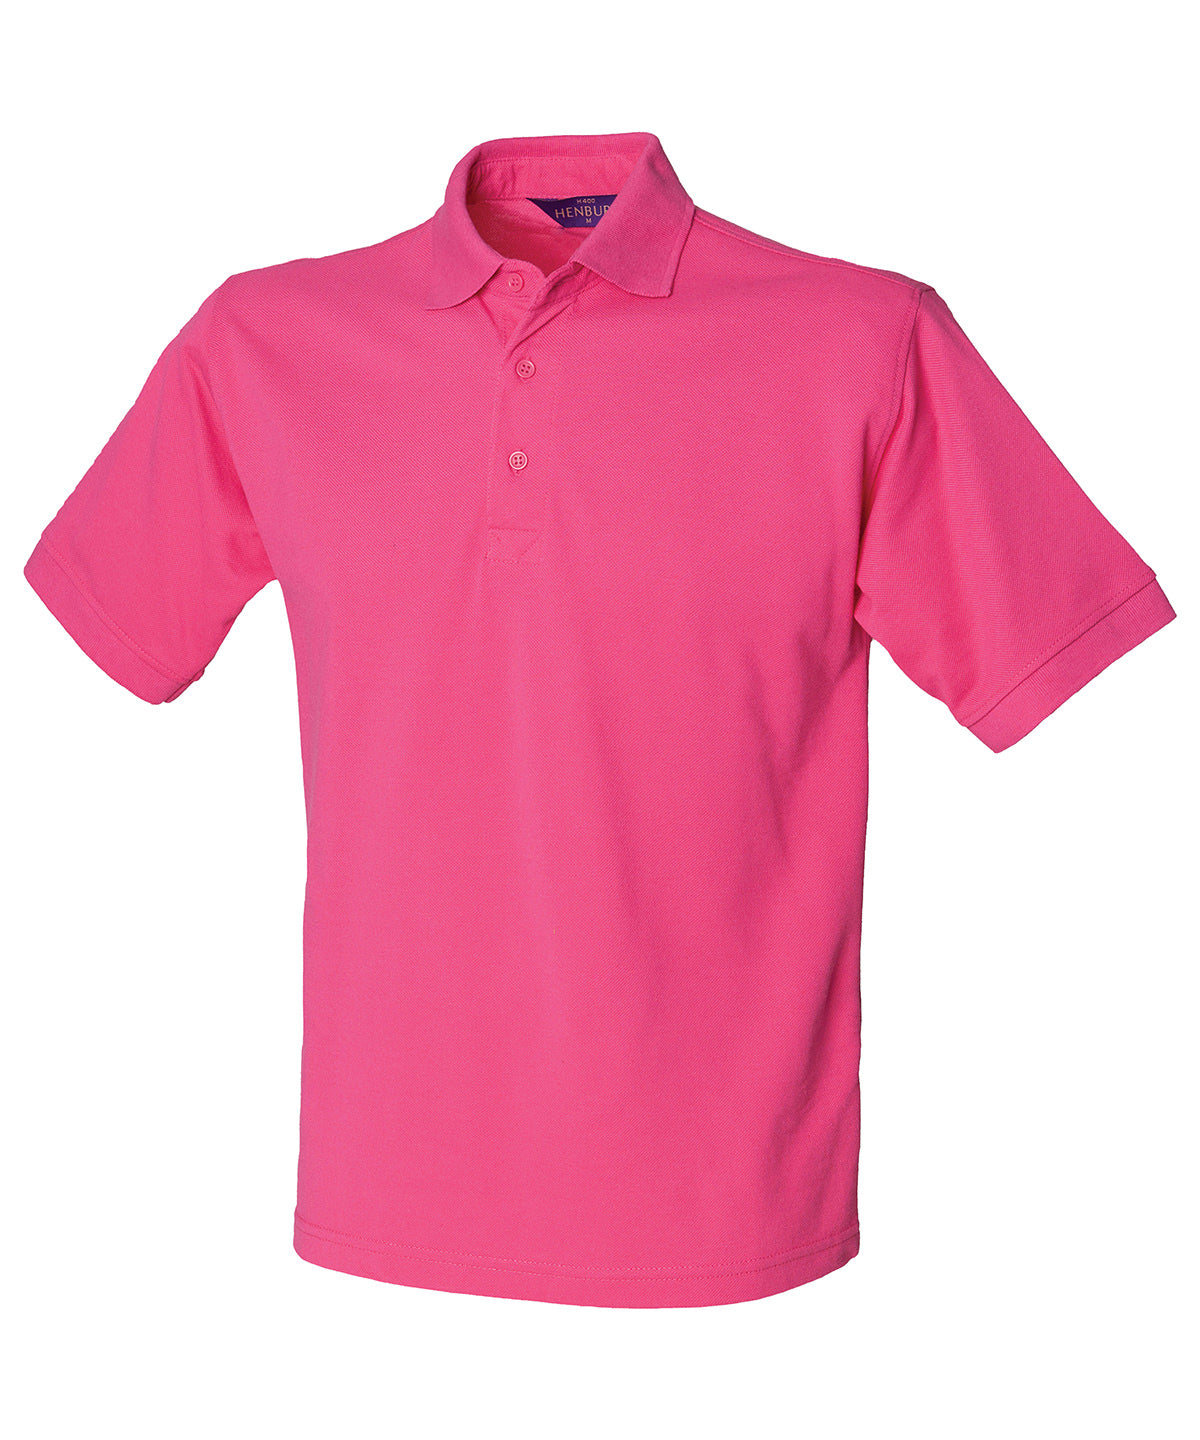 Personalised Polo Shirts - Light Pink Henbury 65/35 Classic piqué polo shirt